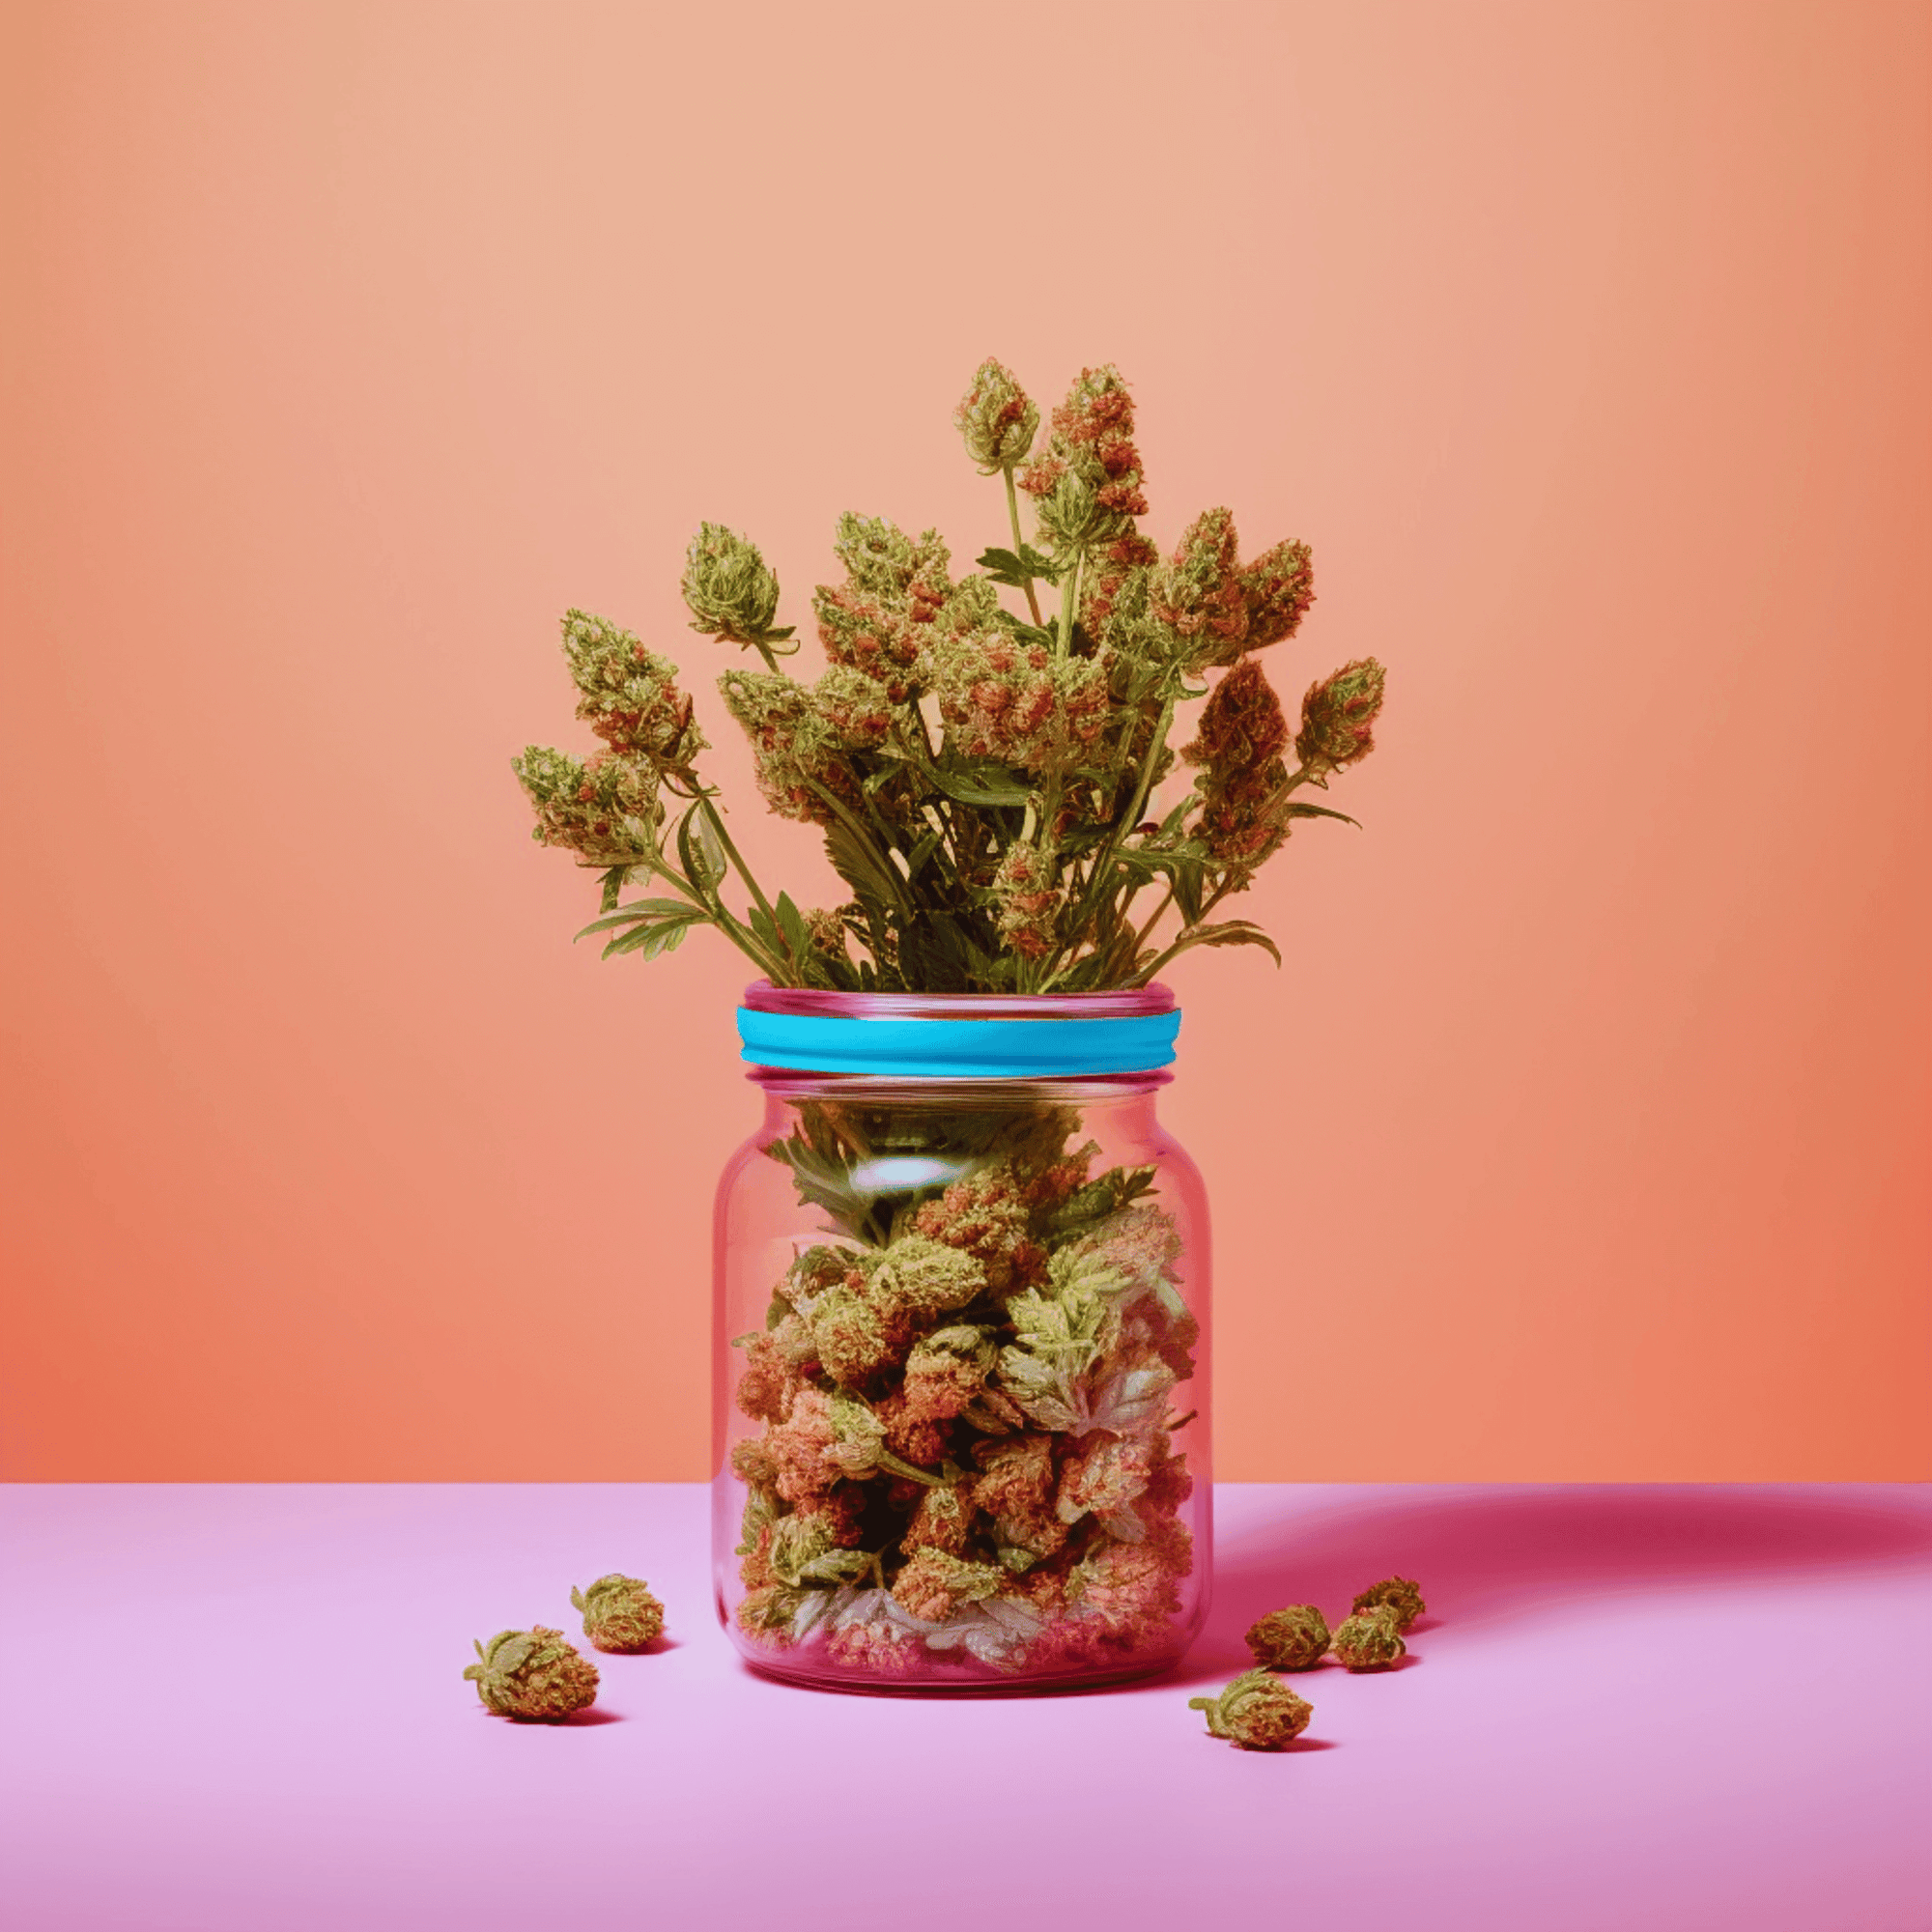 Cannabis Buds & Stems In A Jar